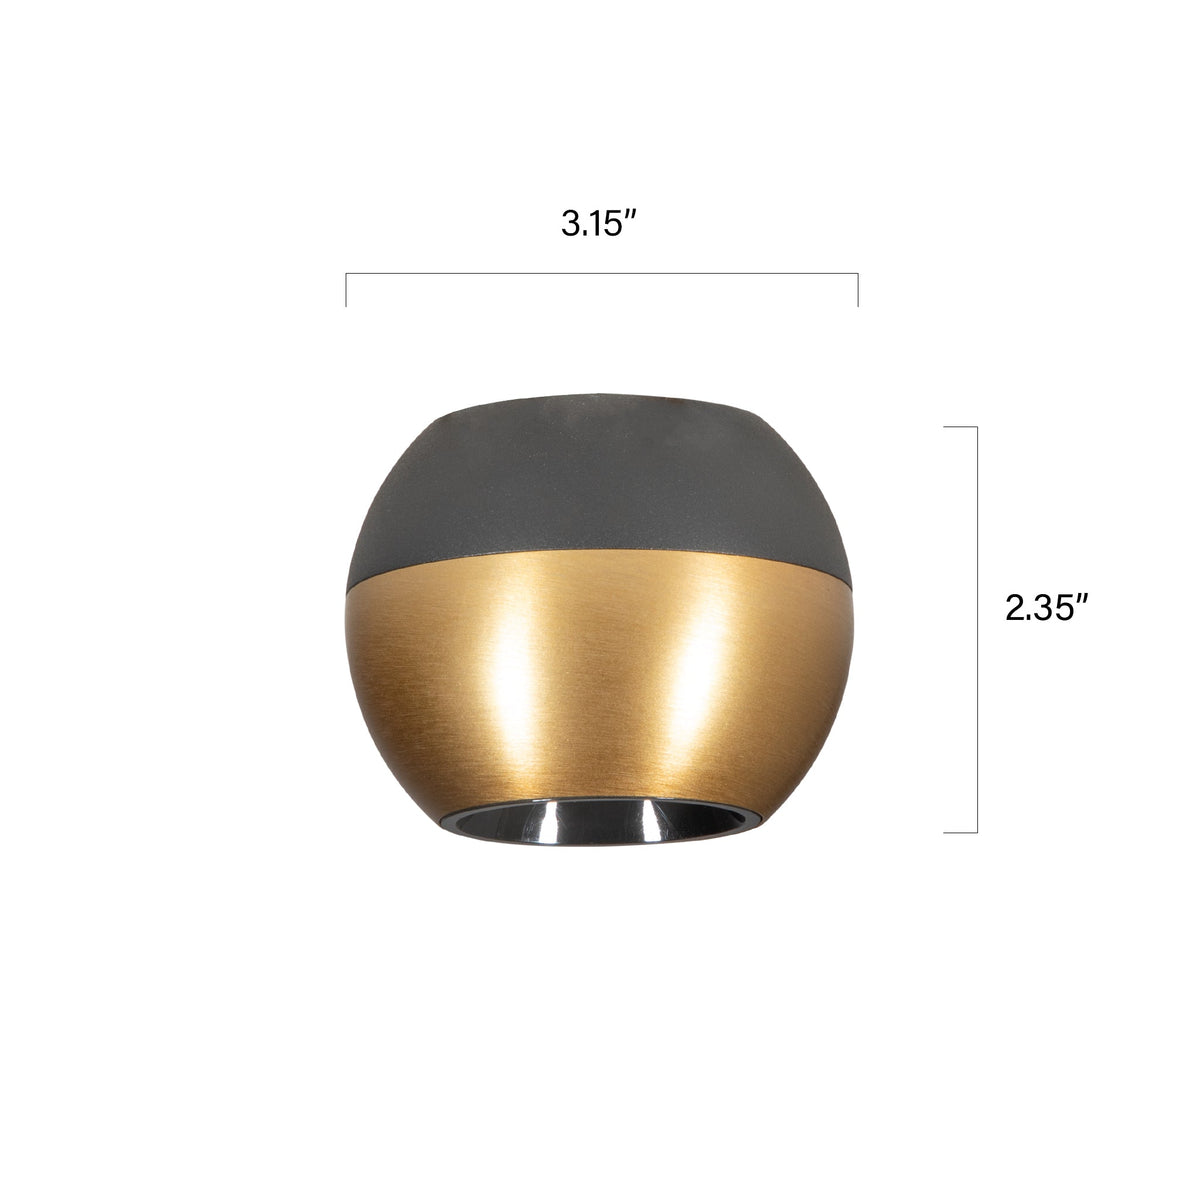 Shop NXT Black Gold LED Ceiling Light Surface light